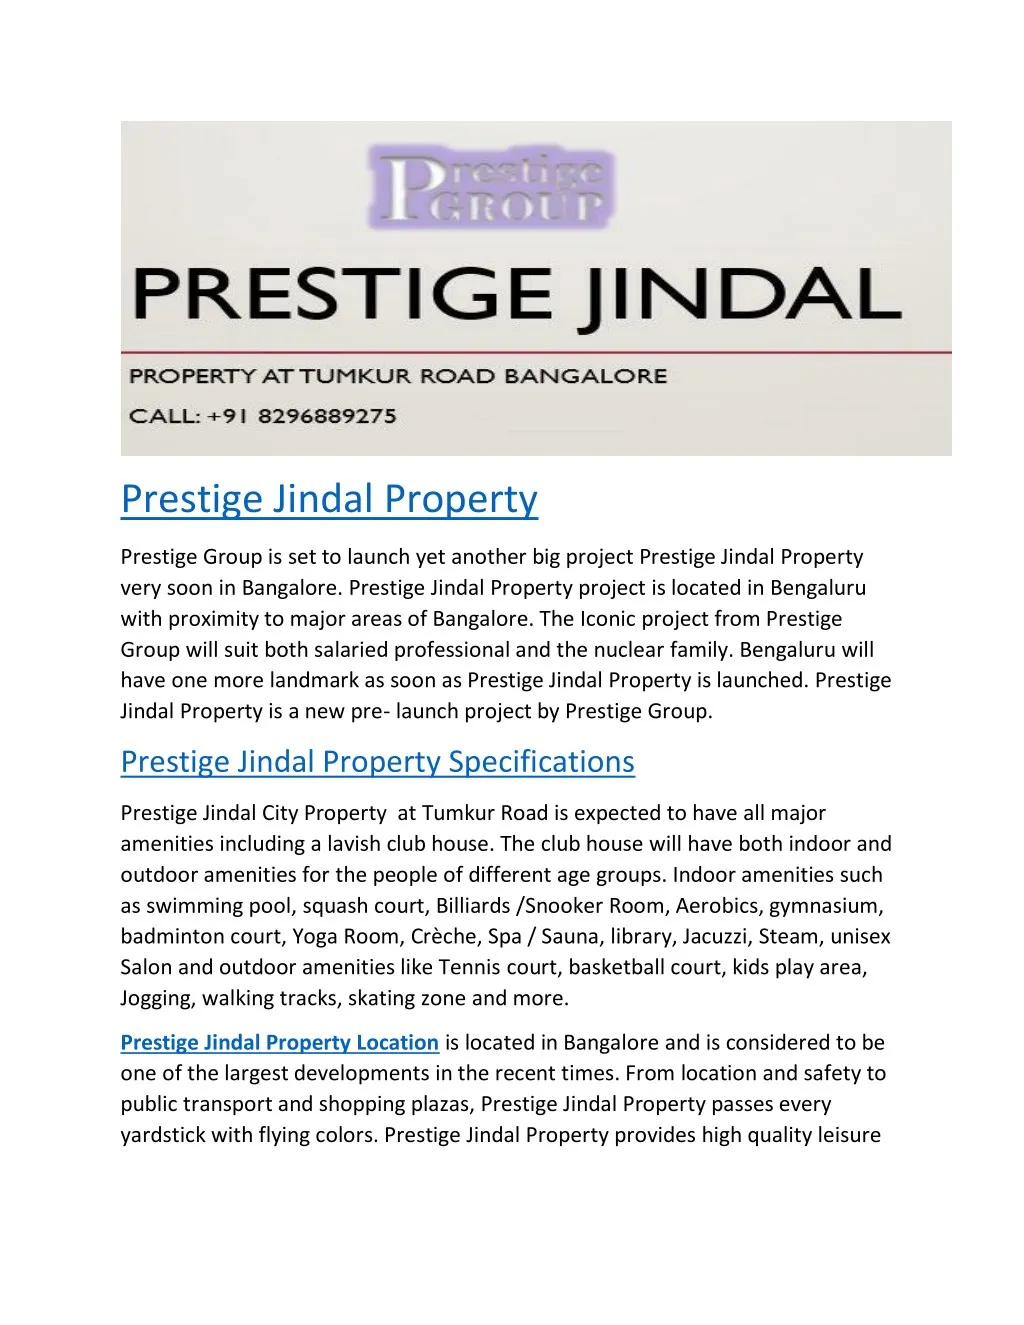 prestige jindal property